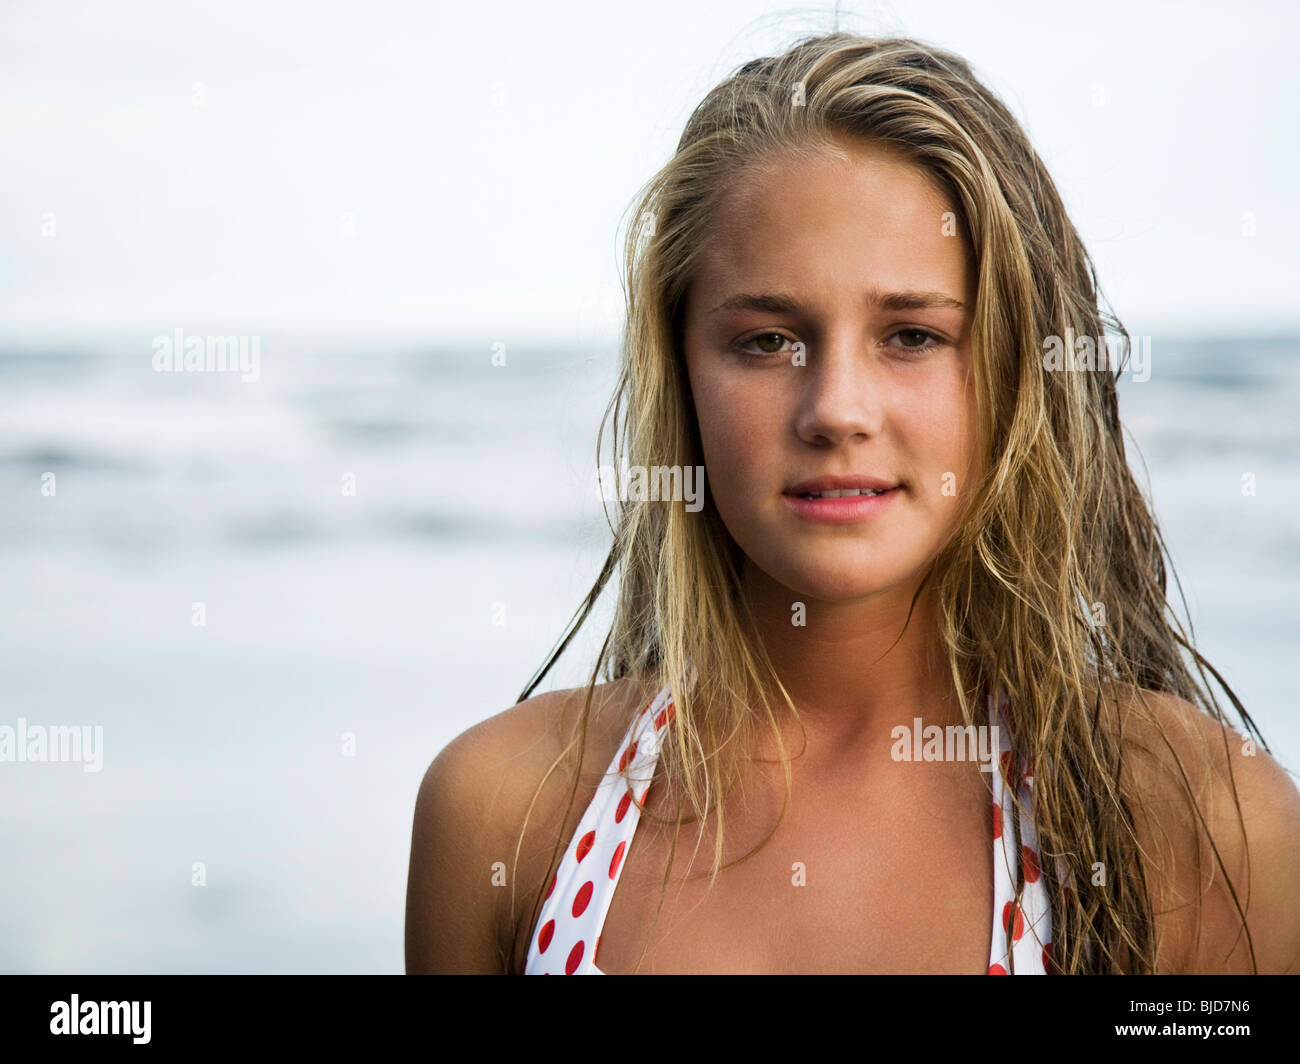 Junge Frau am Strand. Stockfoto